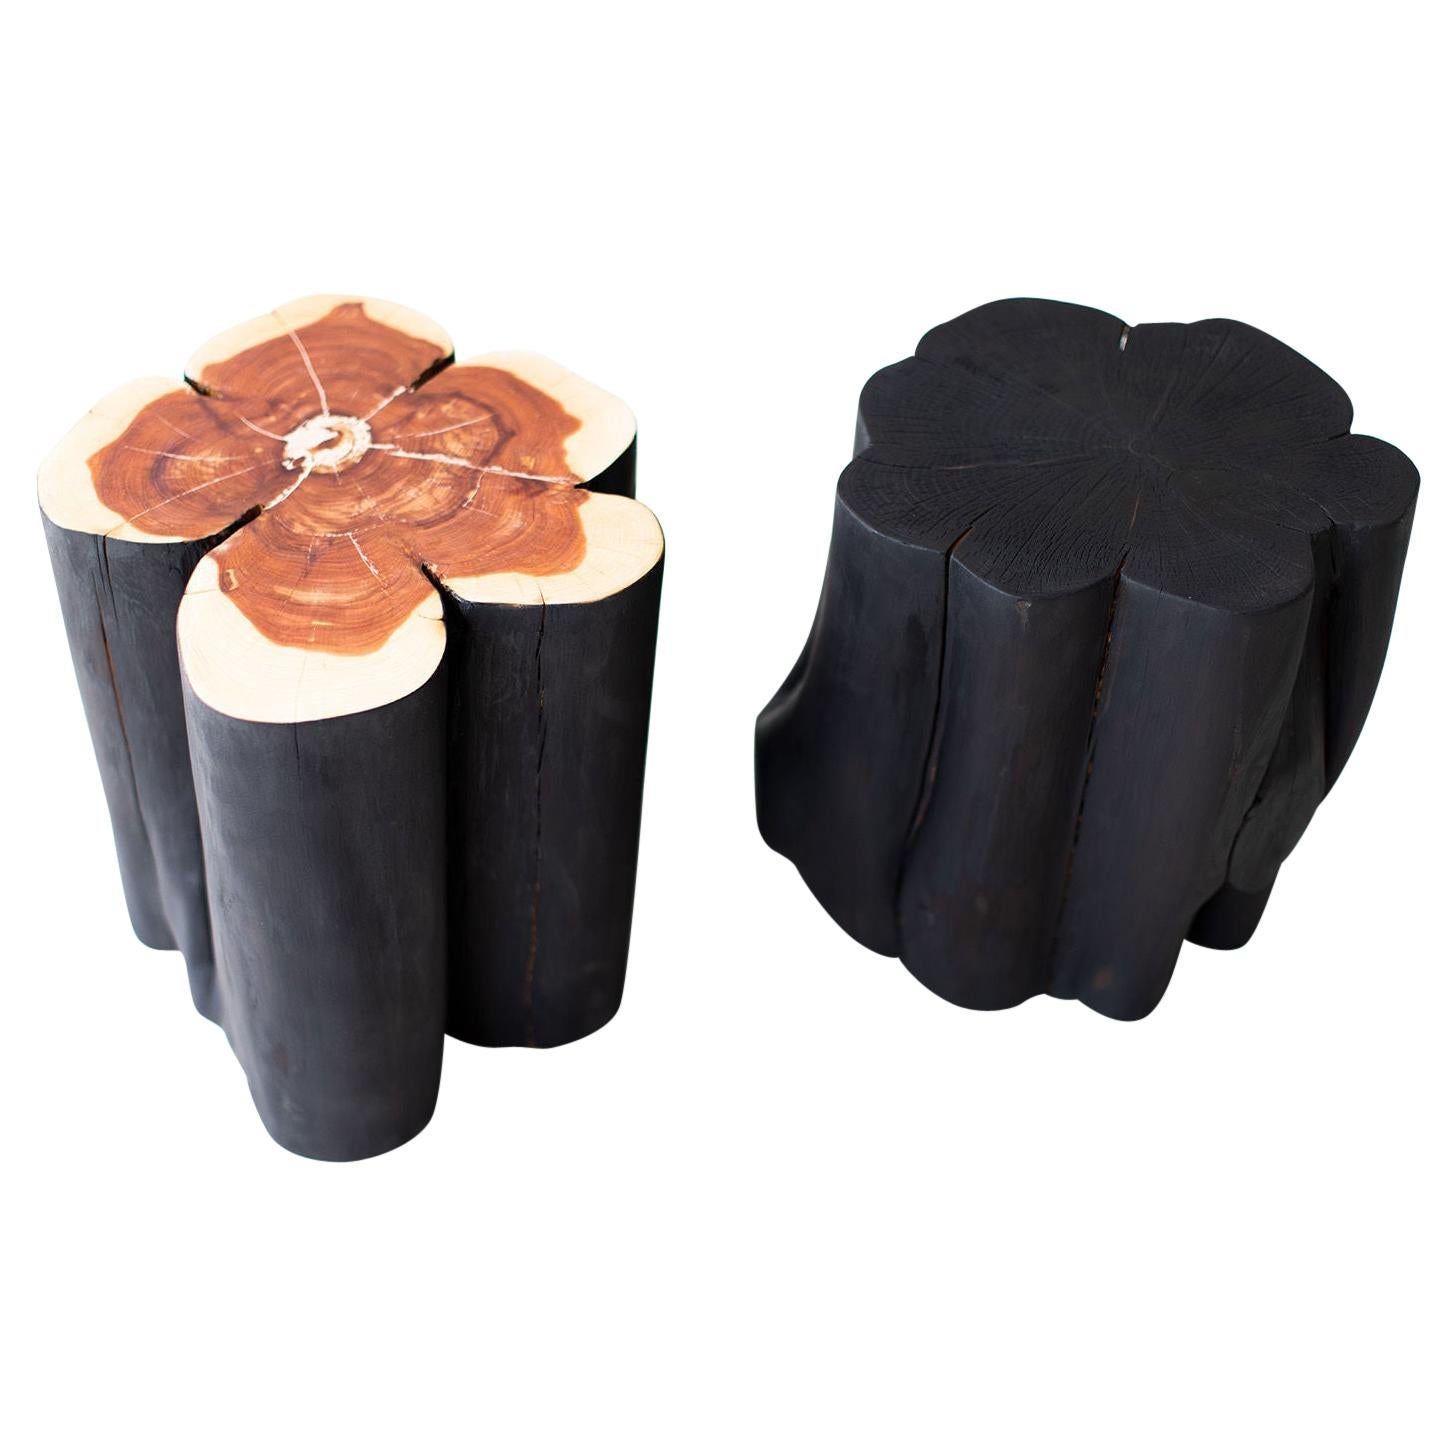 Shou Sugi Ban Burned Black Stumps For Sale